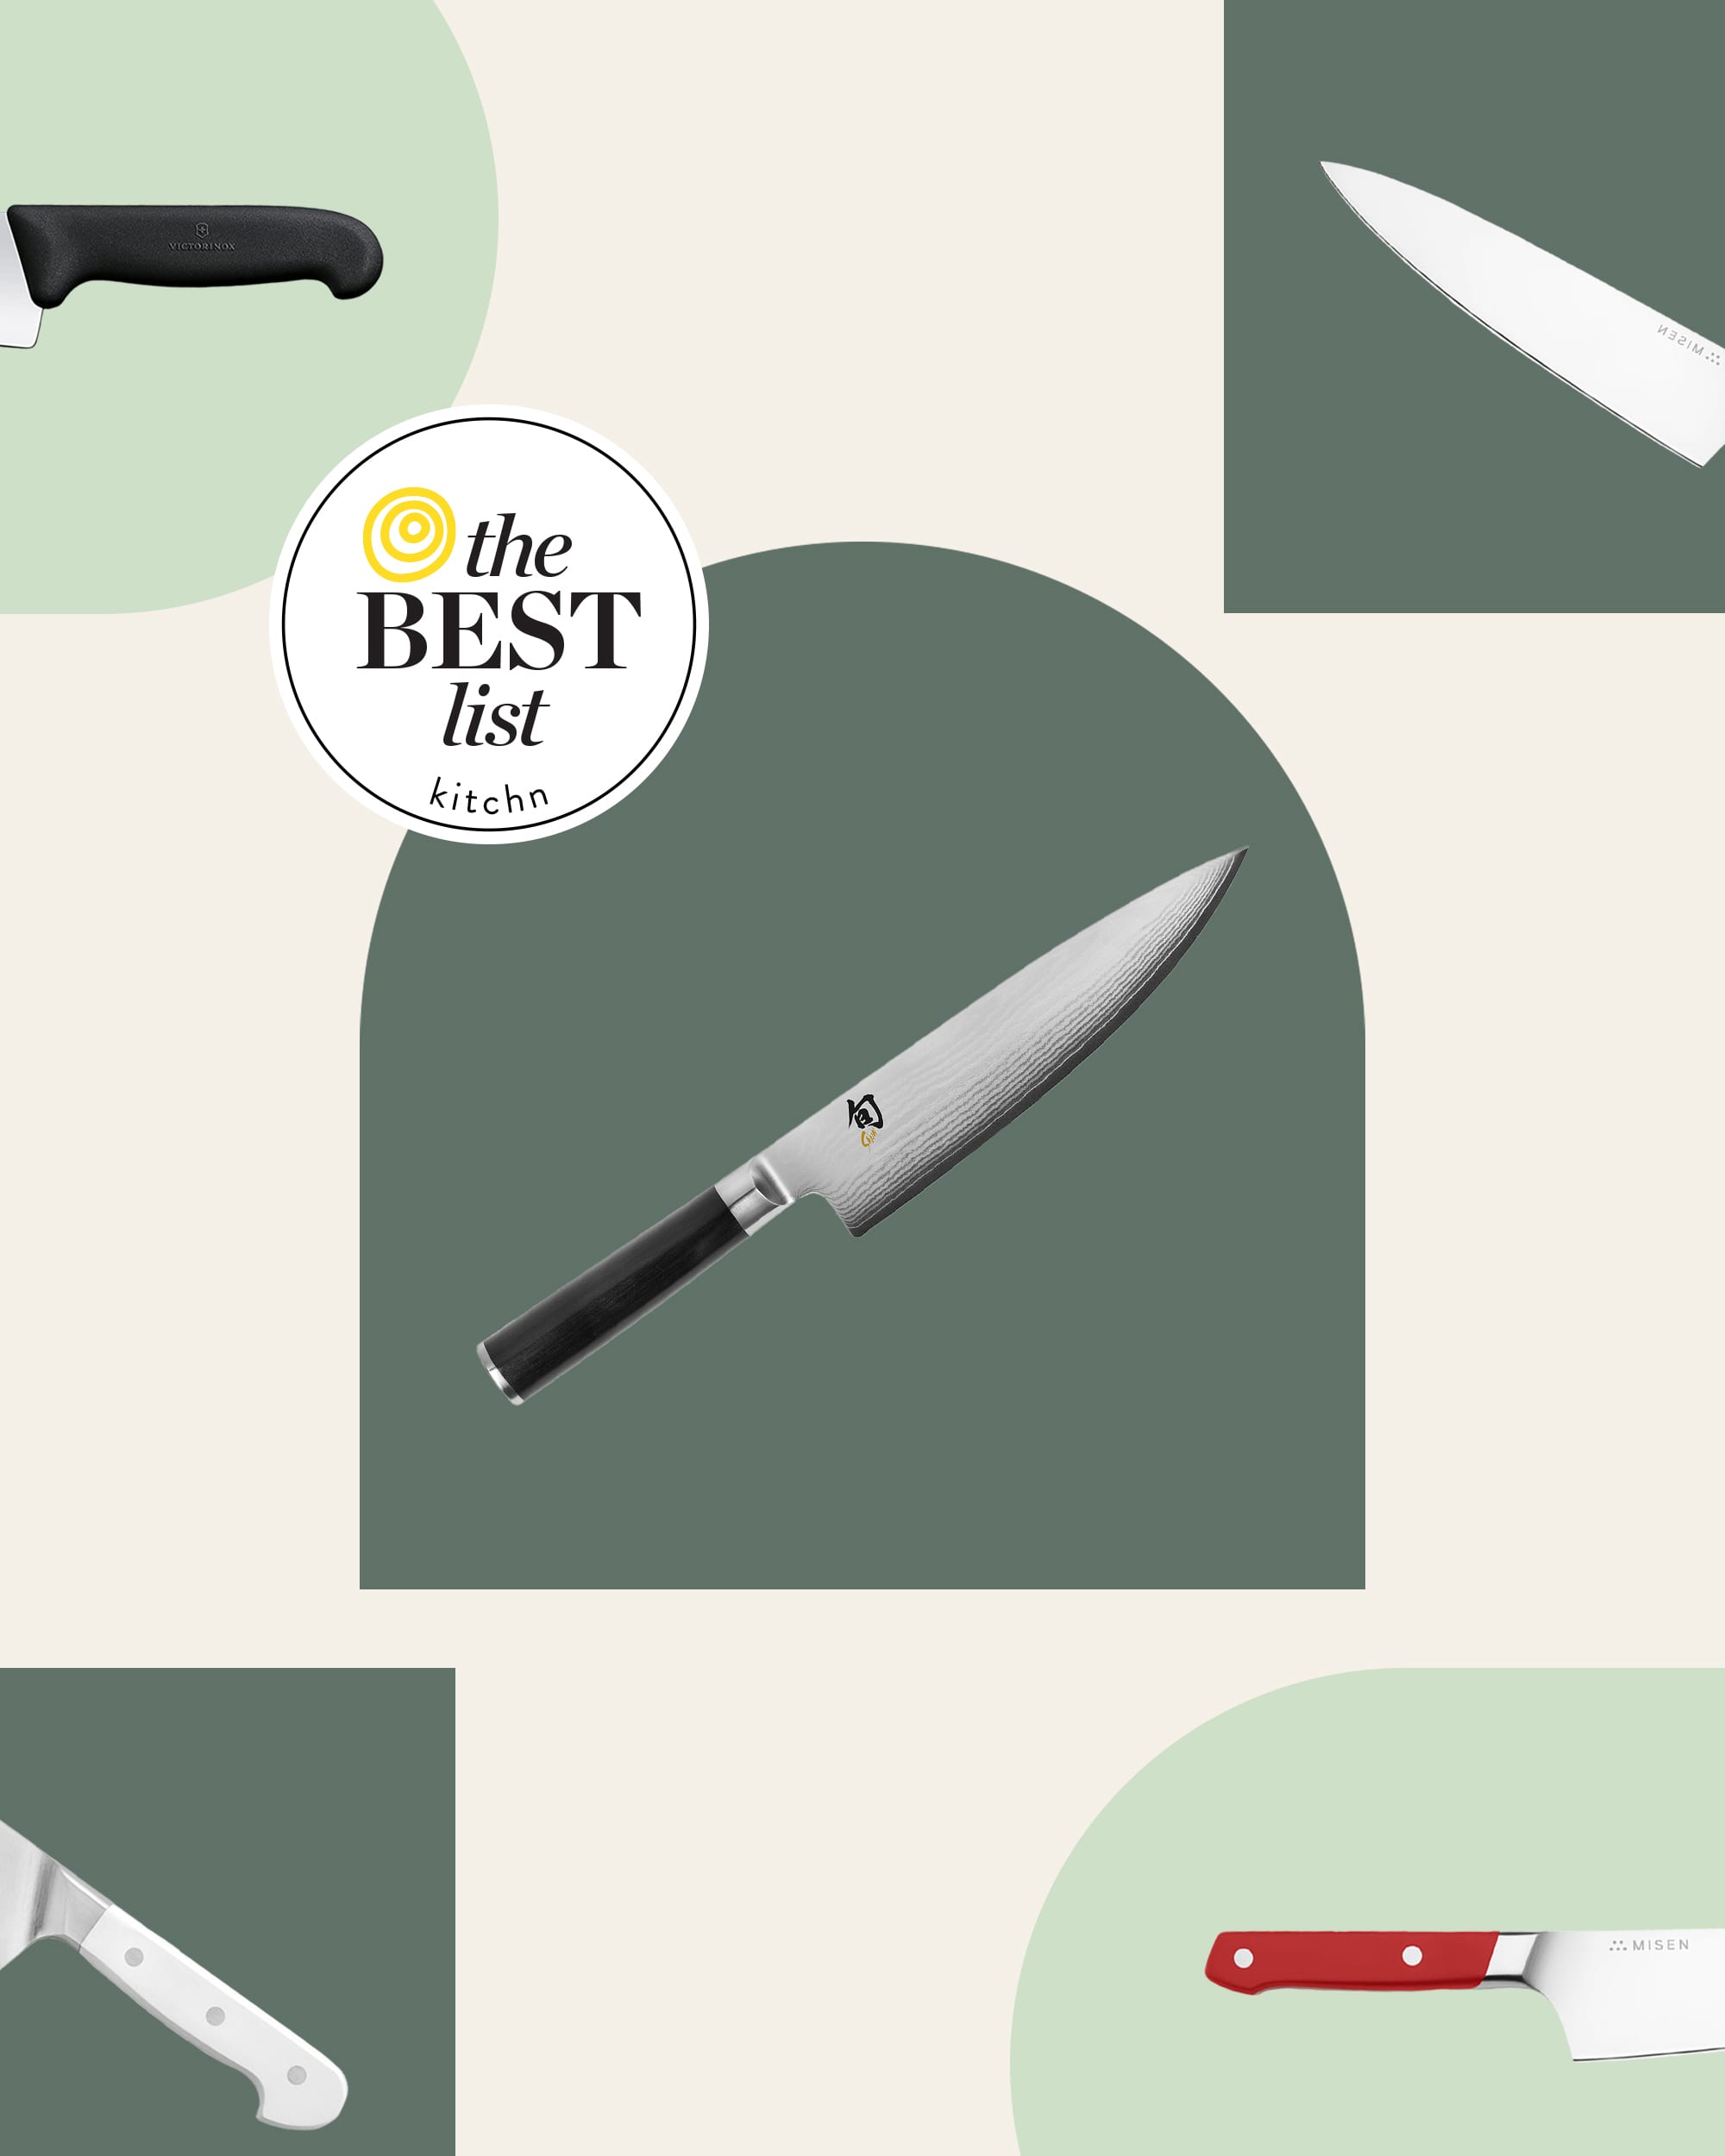 6 Best Knife Sharpeners 2023